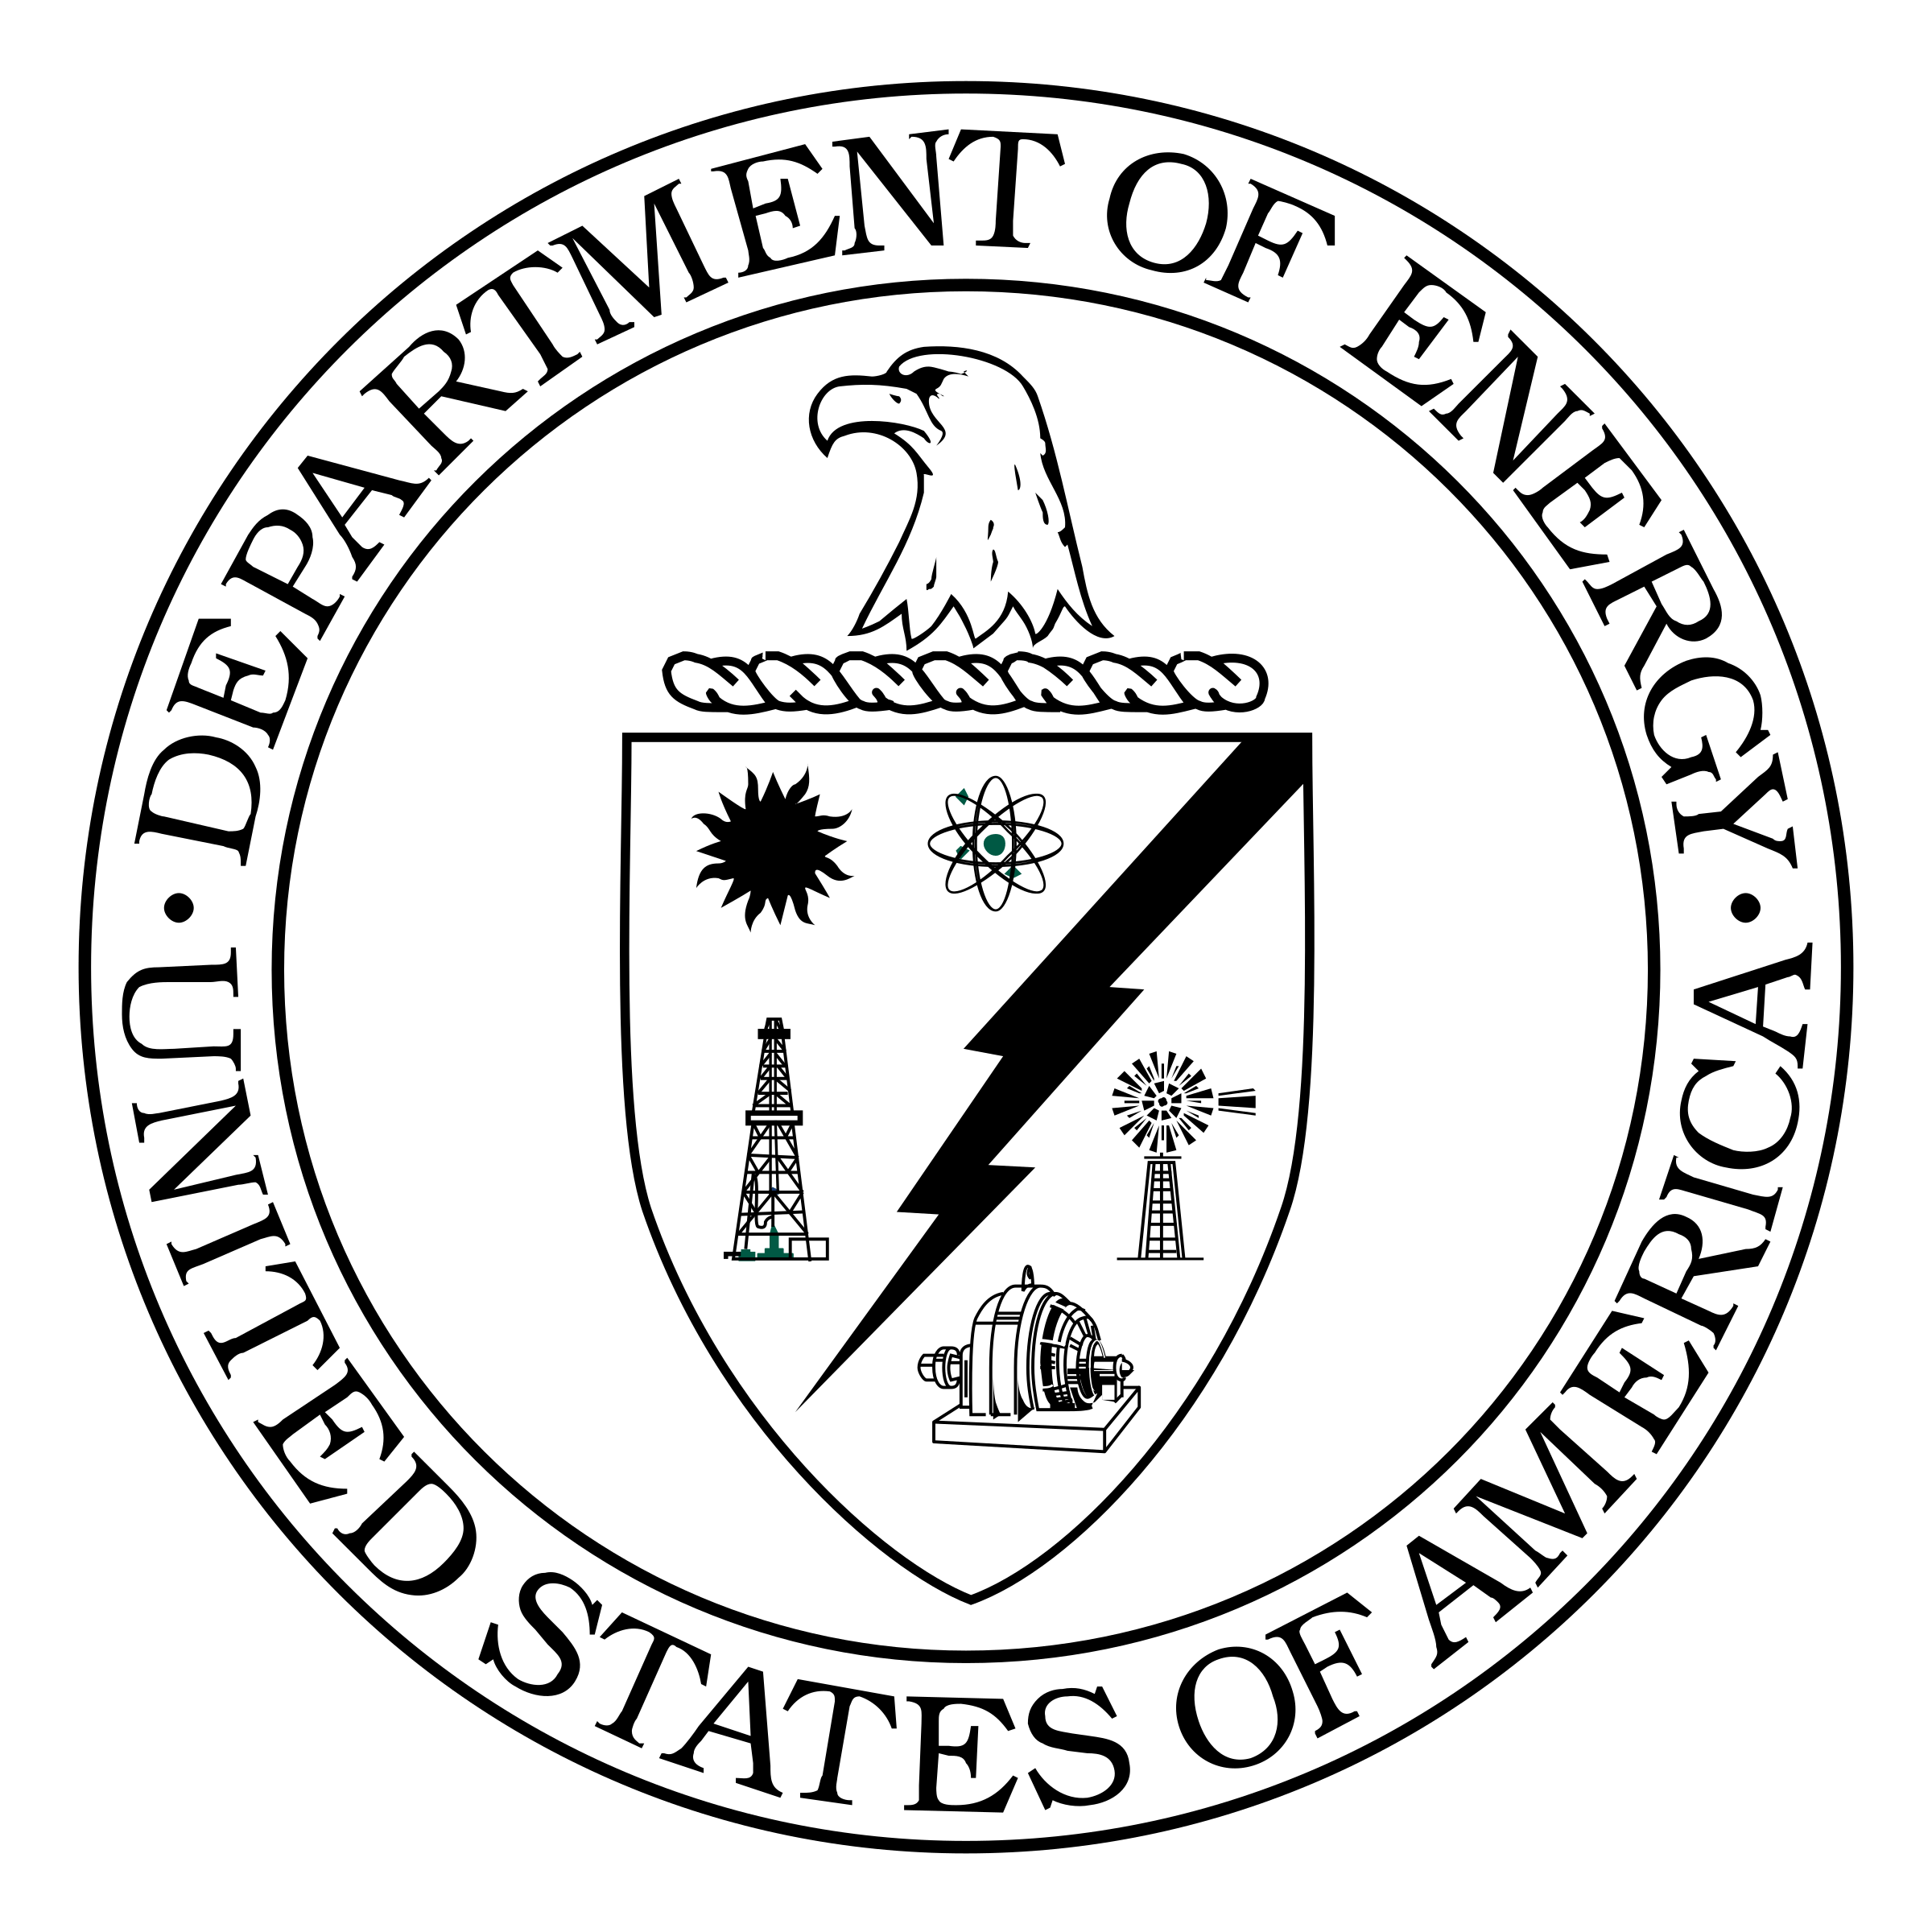 Department of Energy Logo - Department Of Energy Logo PNG Transparent & SVG Vector - Freebie Supply